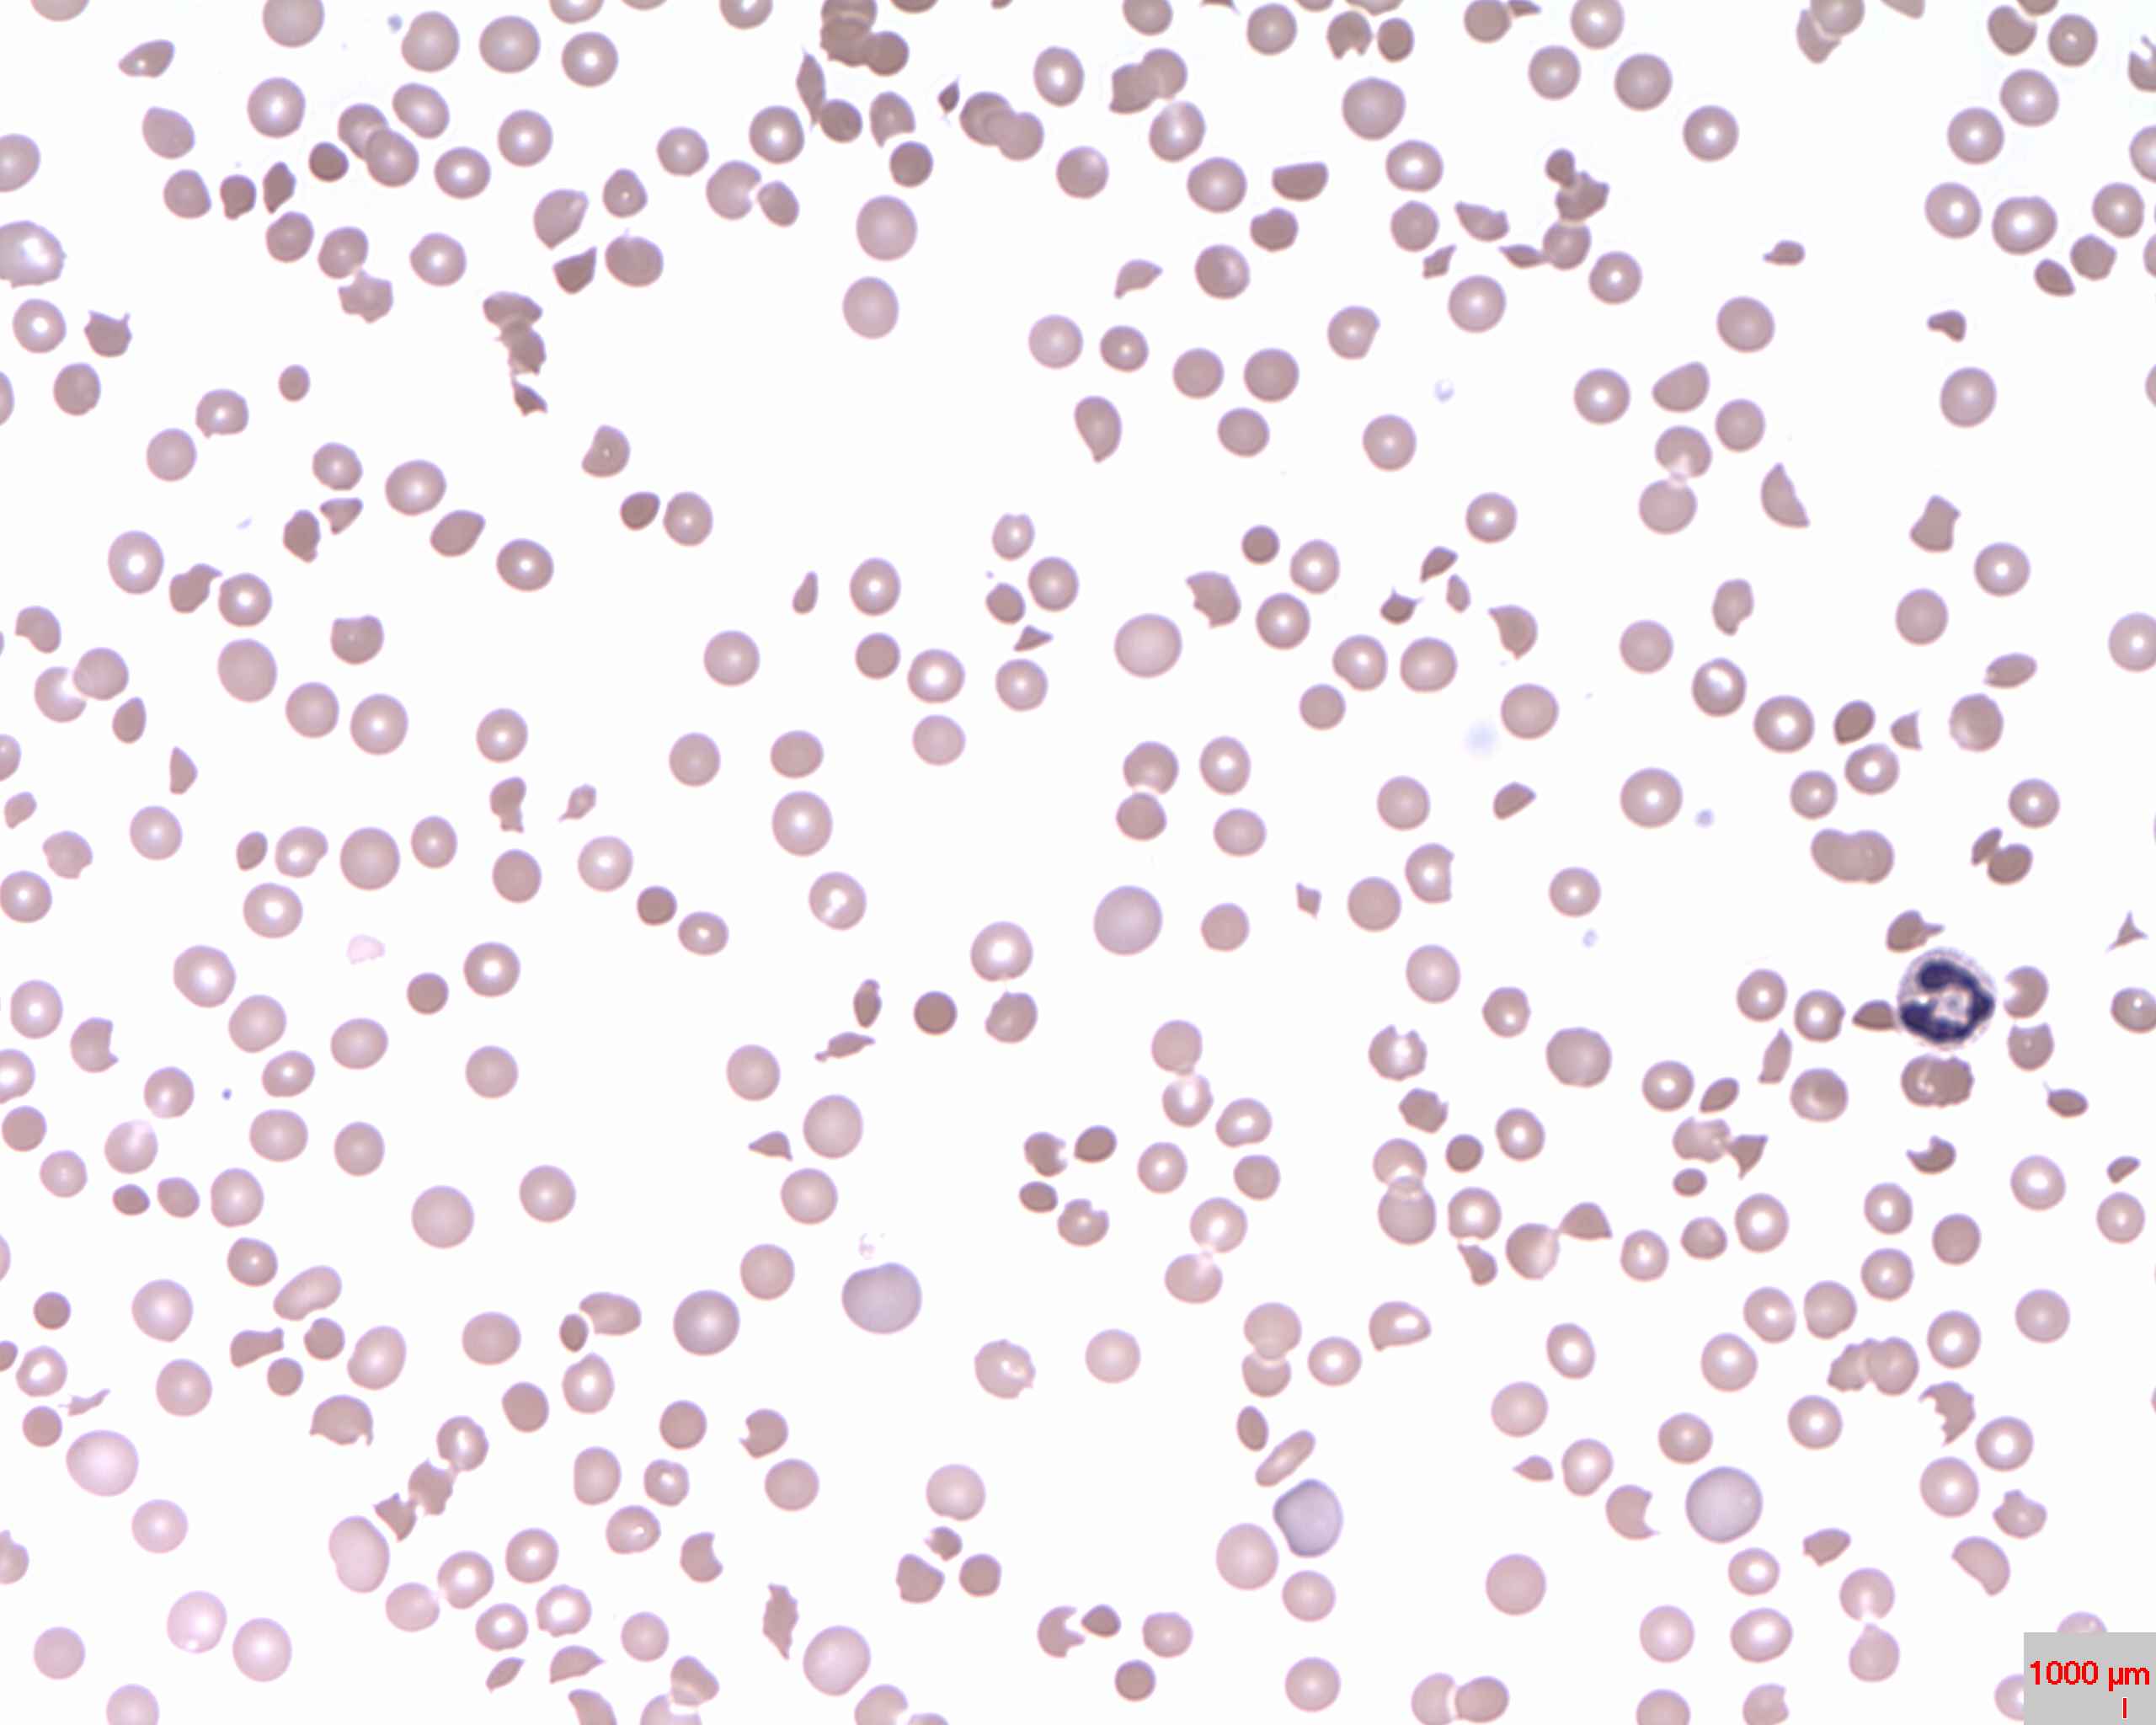 Schistocyte Wikipedia